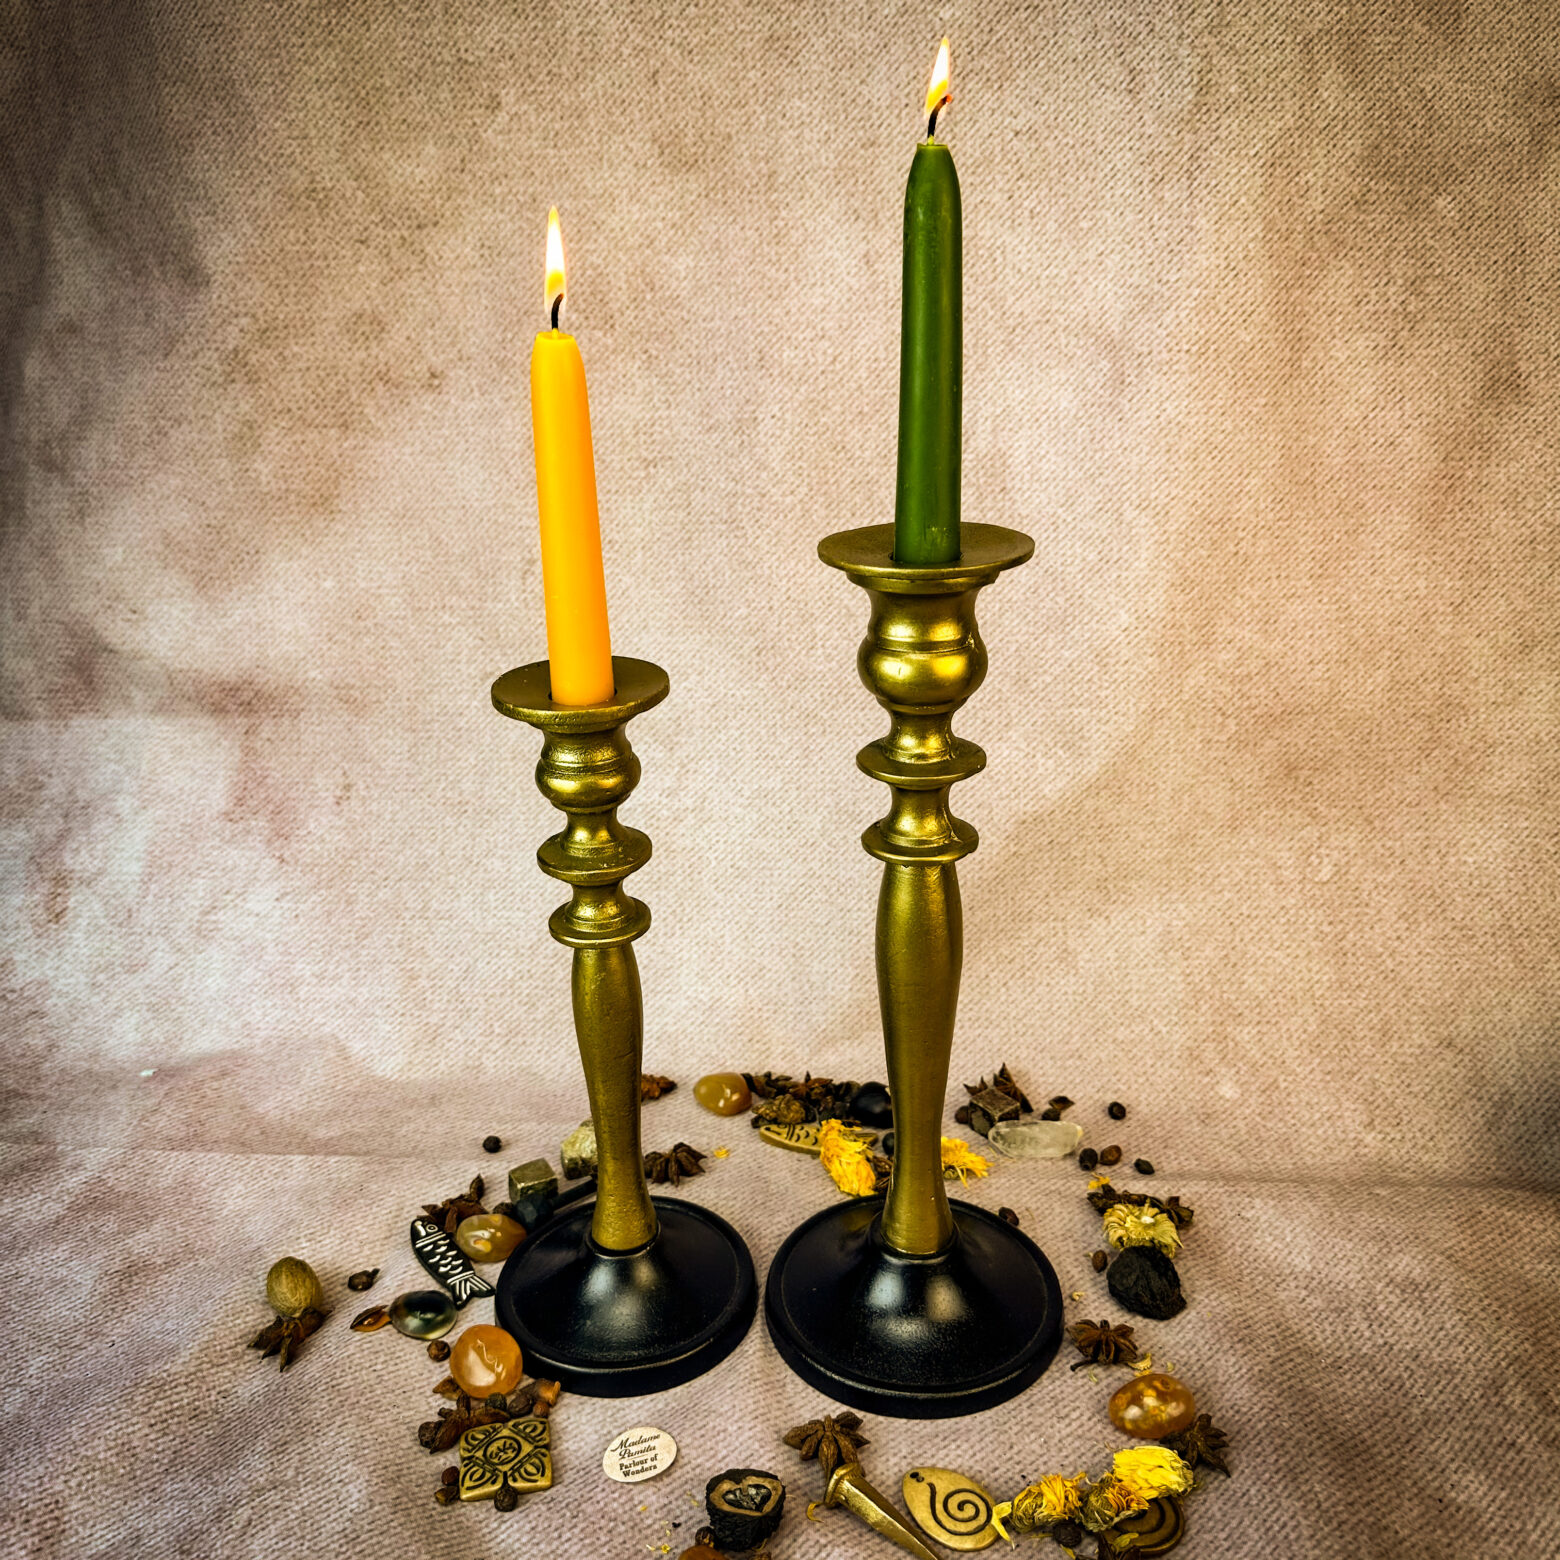 Baba Yaga Golden Spindle Candle Holder